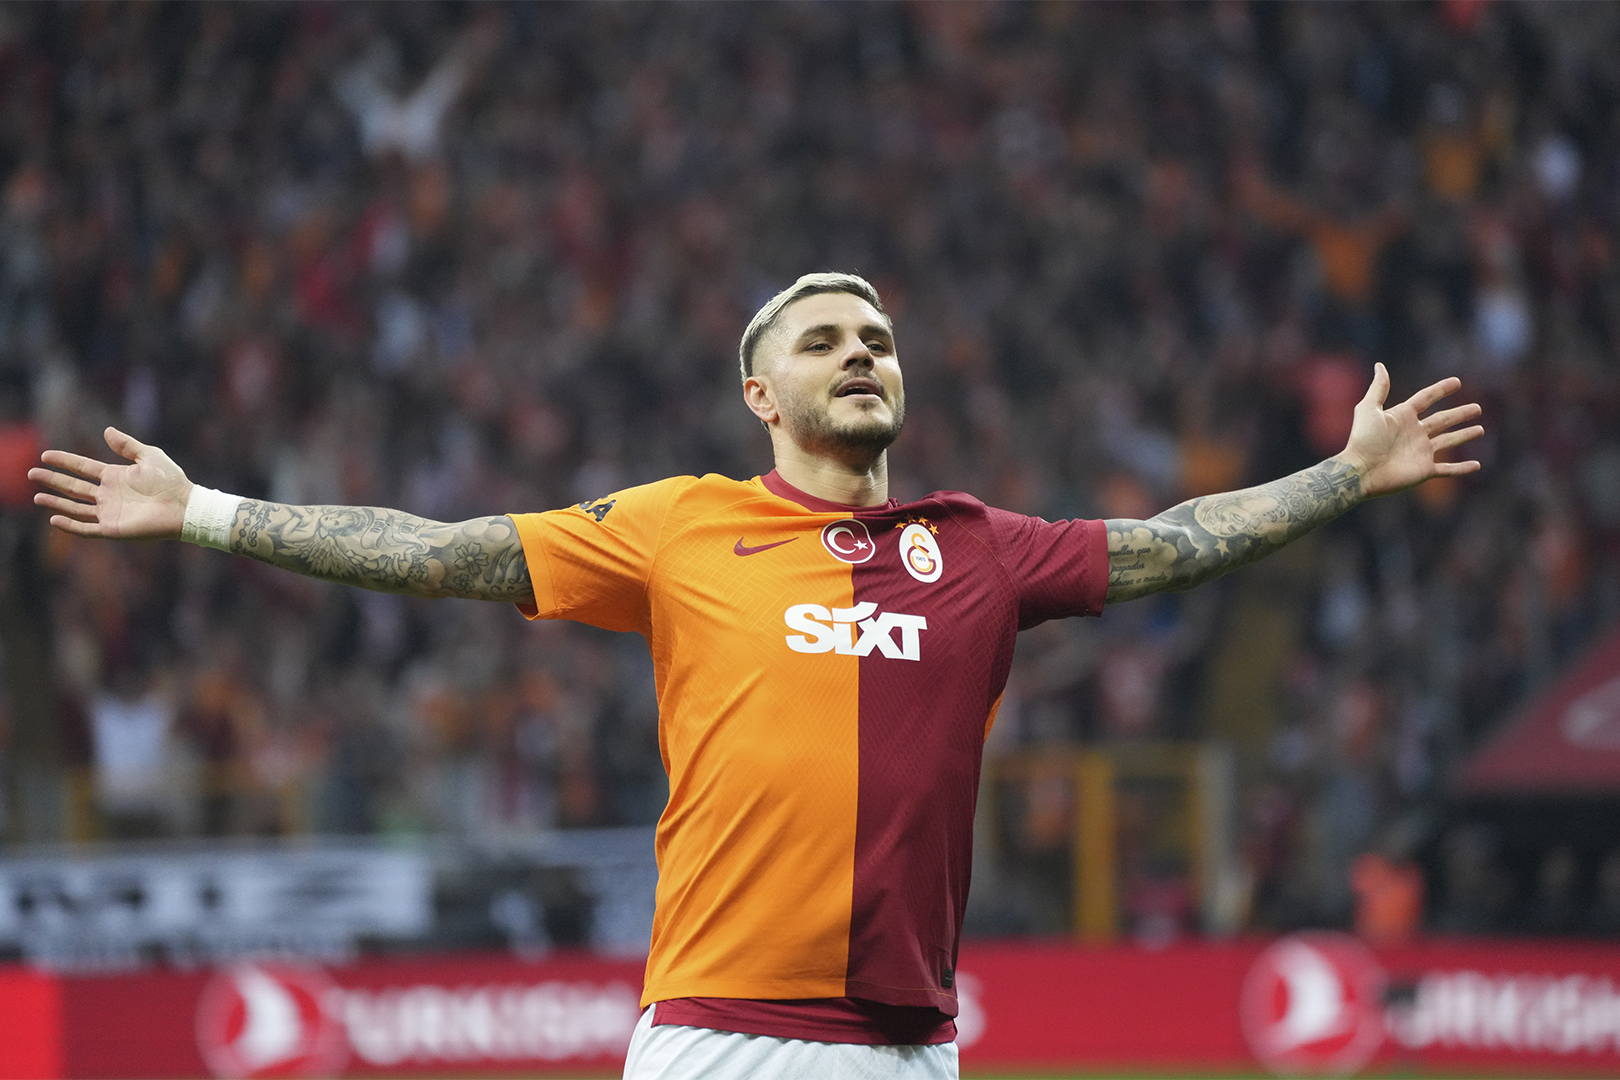 Süper Lig : Galatasaray titré grâce à son Prince Mauro Icardi